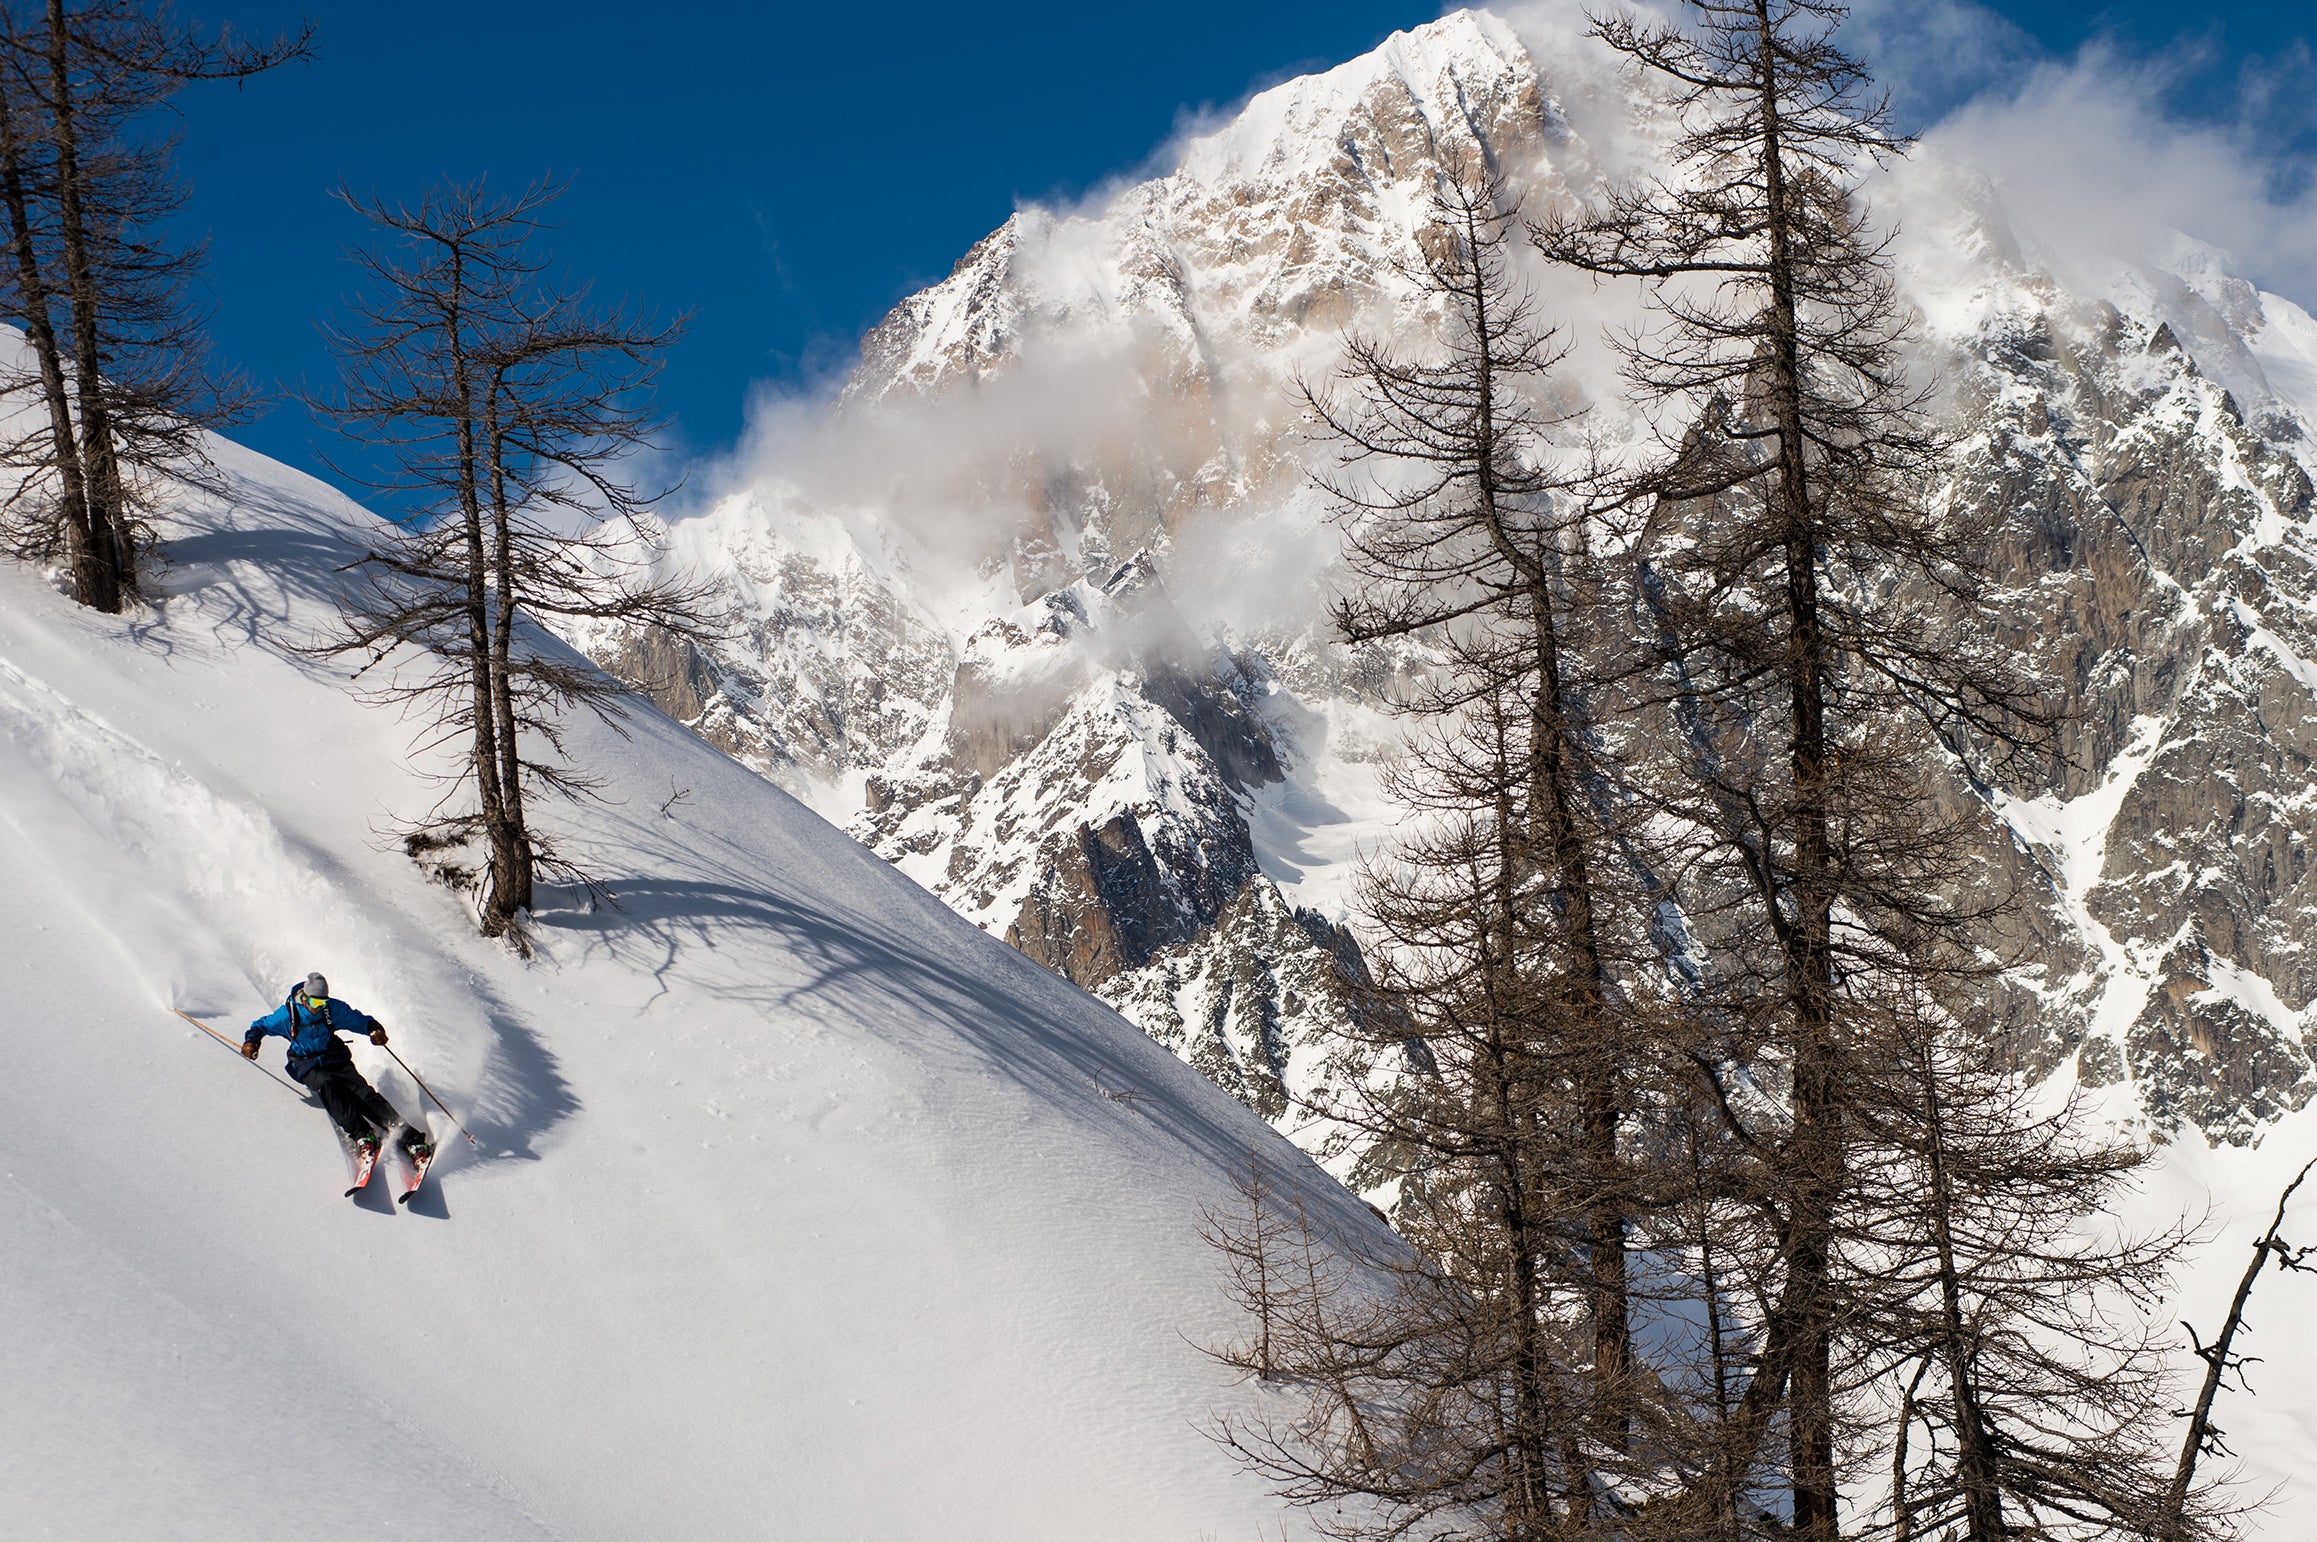 Skier powder turn in Italy